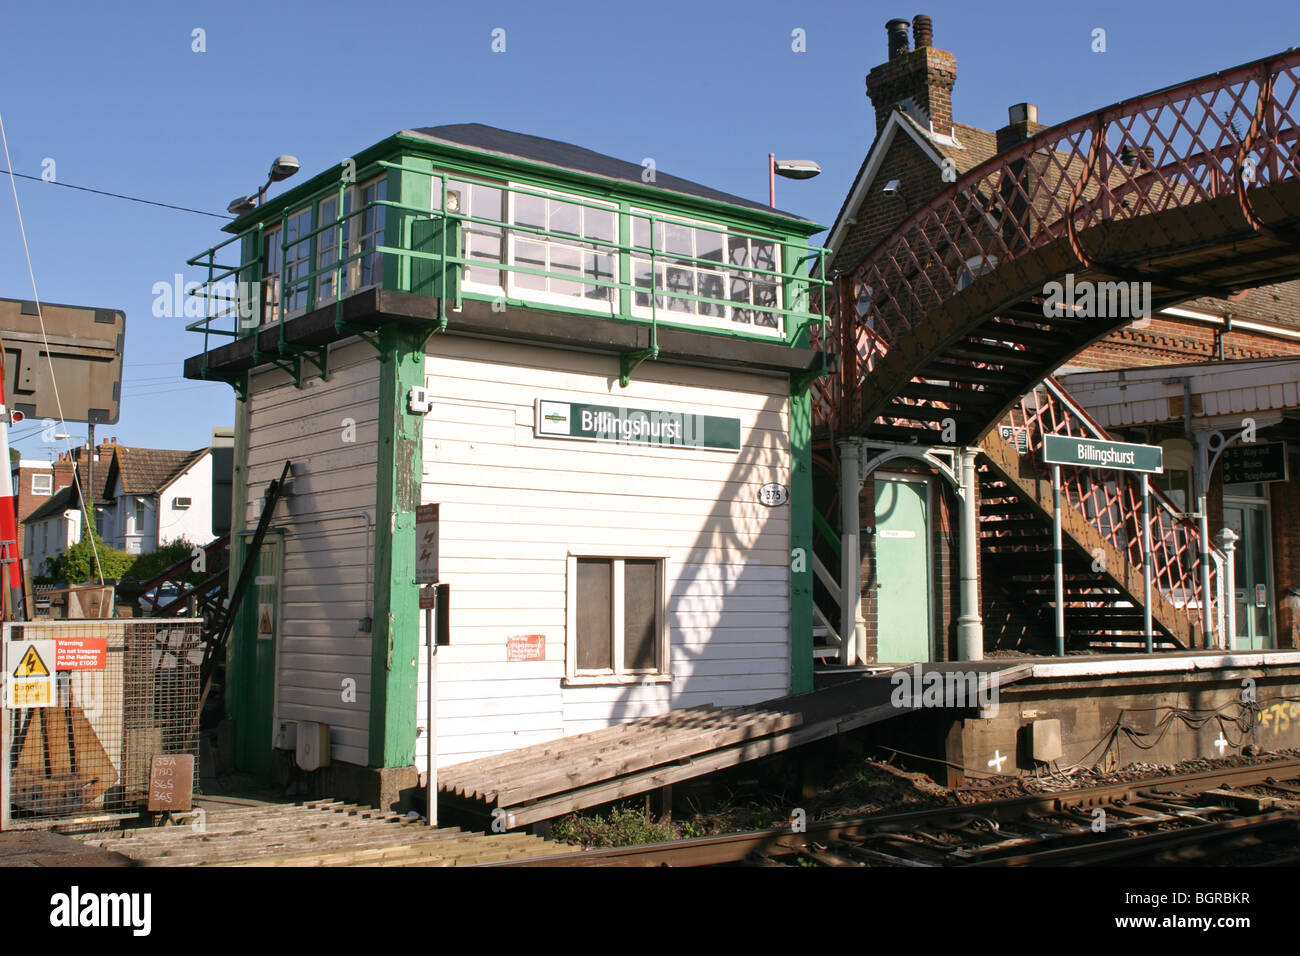 Stellwerk Billingshurst Railway Station West Sussex UK Stockfoto